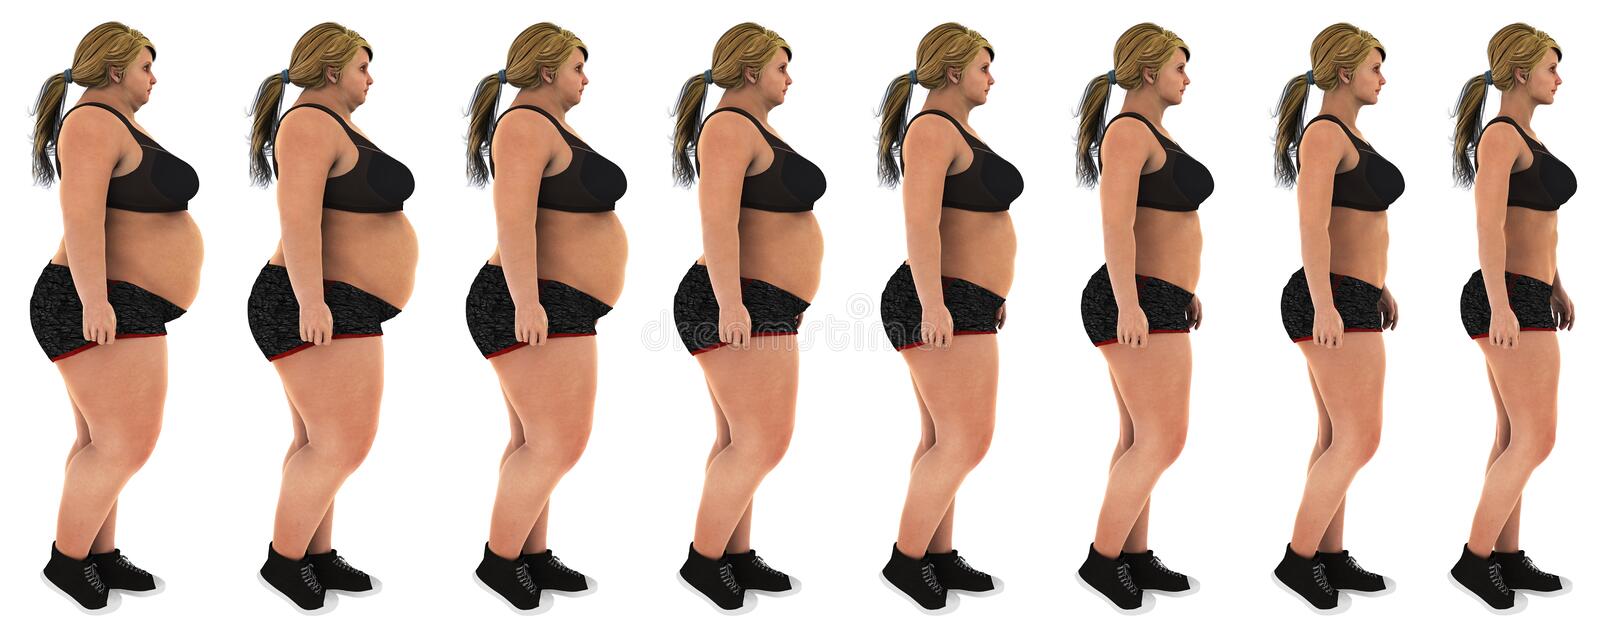 fat-to-slim-woman-weight-loss-transformation-profile-shot-37898088.jpg